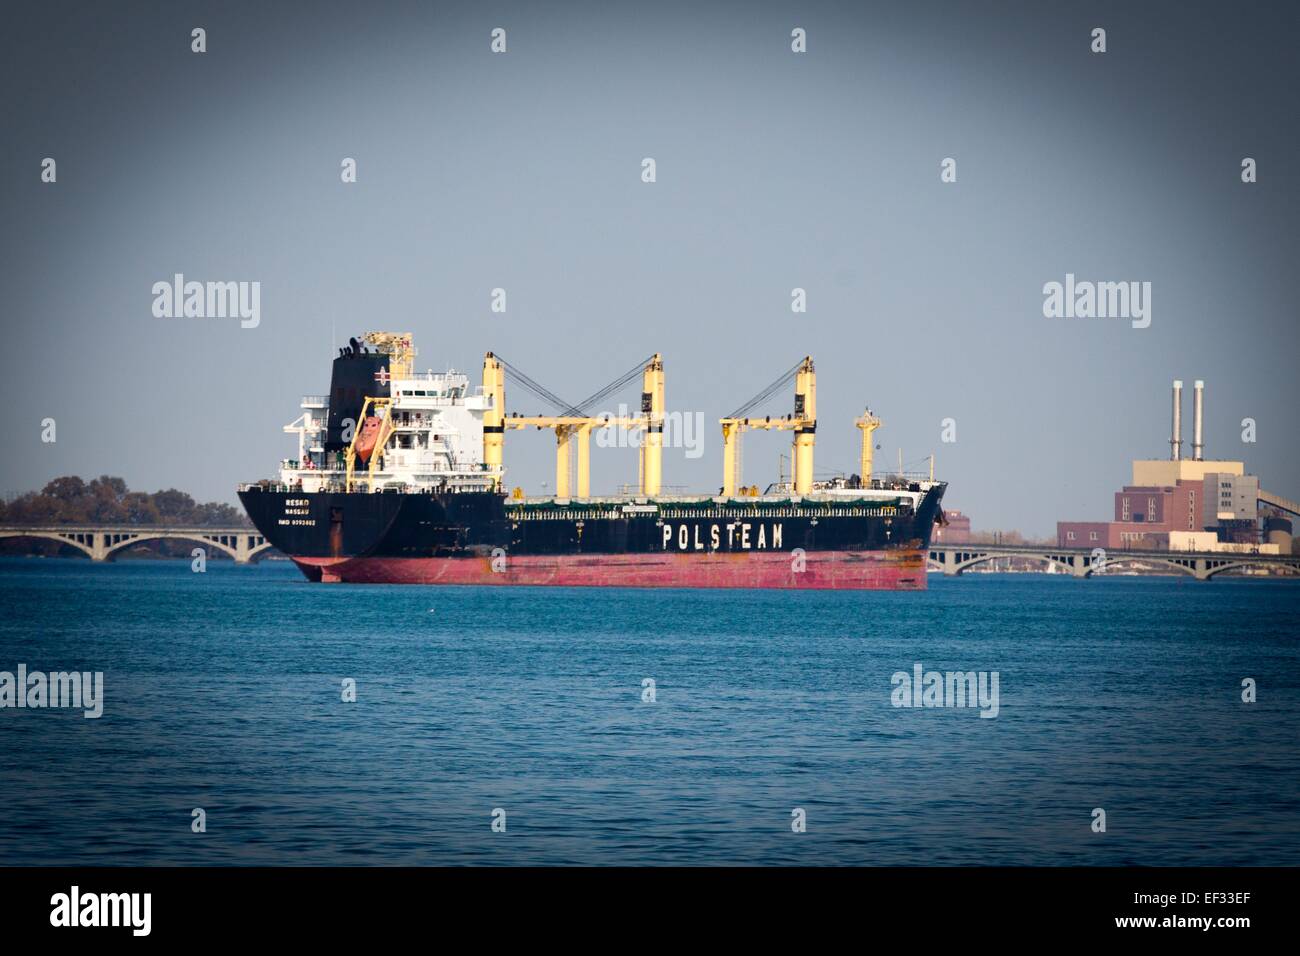 190m lunghezza bulkcarrier Resko di Polsteam, Fiume Detroit, Detroit, MI, Stati Uniti d'America, 25 ottobre 2014. Foto Stock